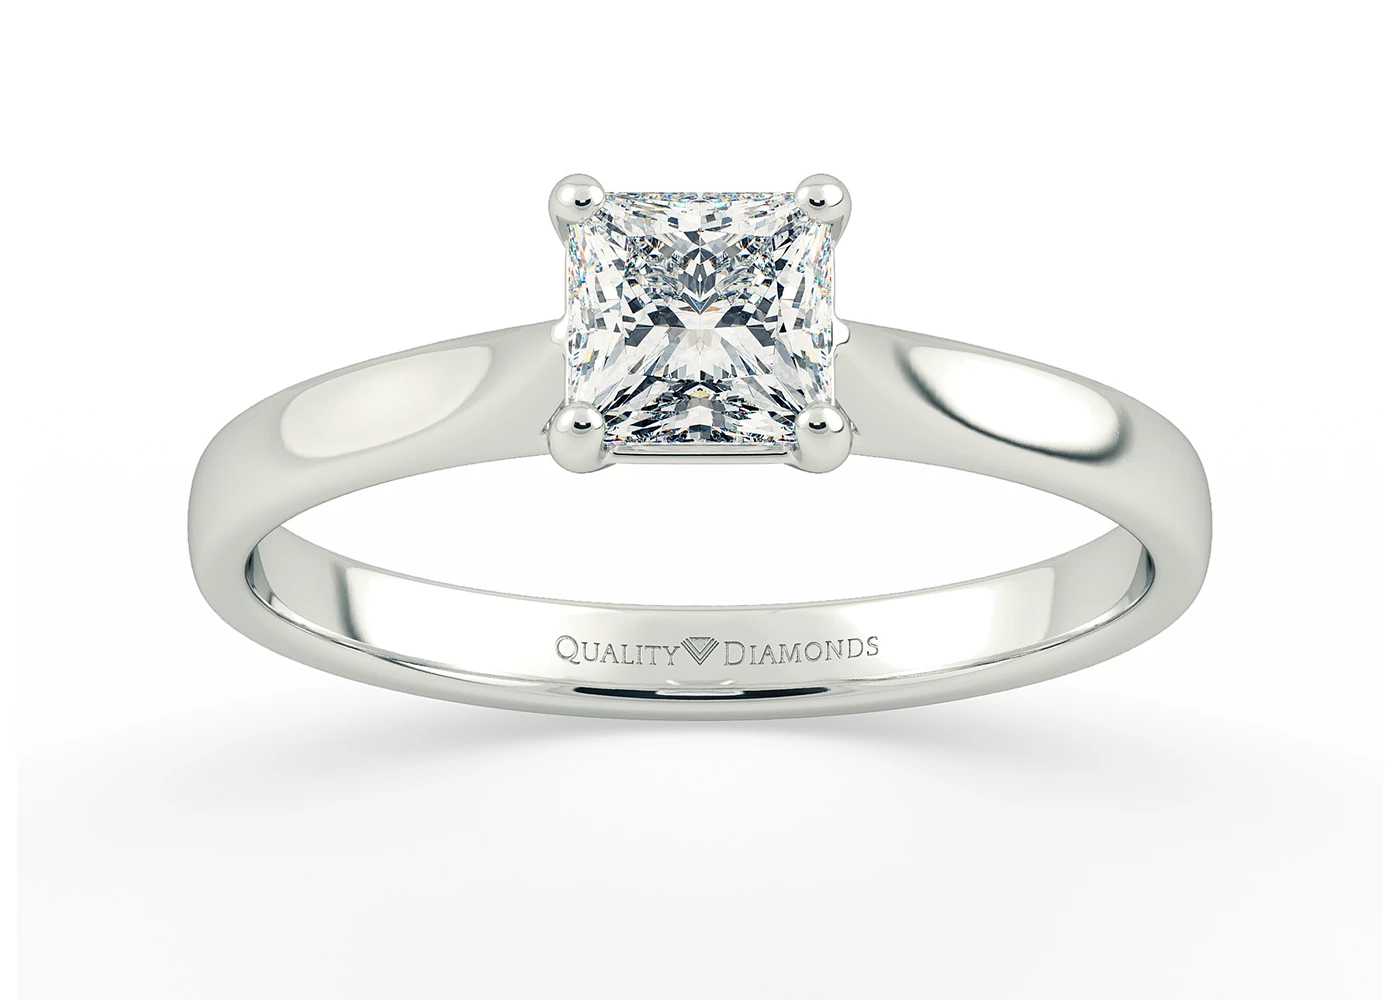 Princess Clara Diamond Ring in 18K White Gold